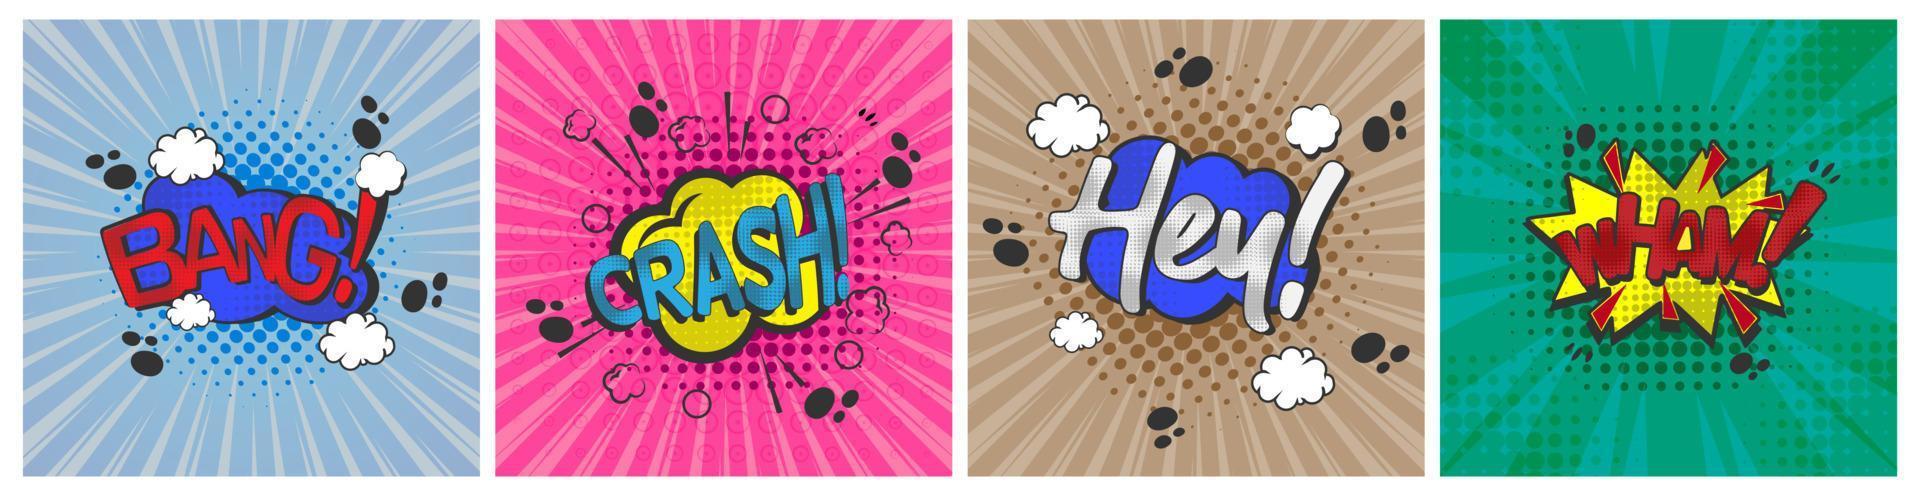 collection de bulles de bande dessinée de texte, wham, hey, crash and bang, pop art de style dessin animé, vecteur